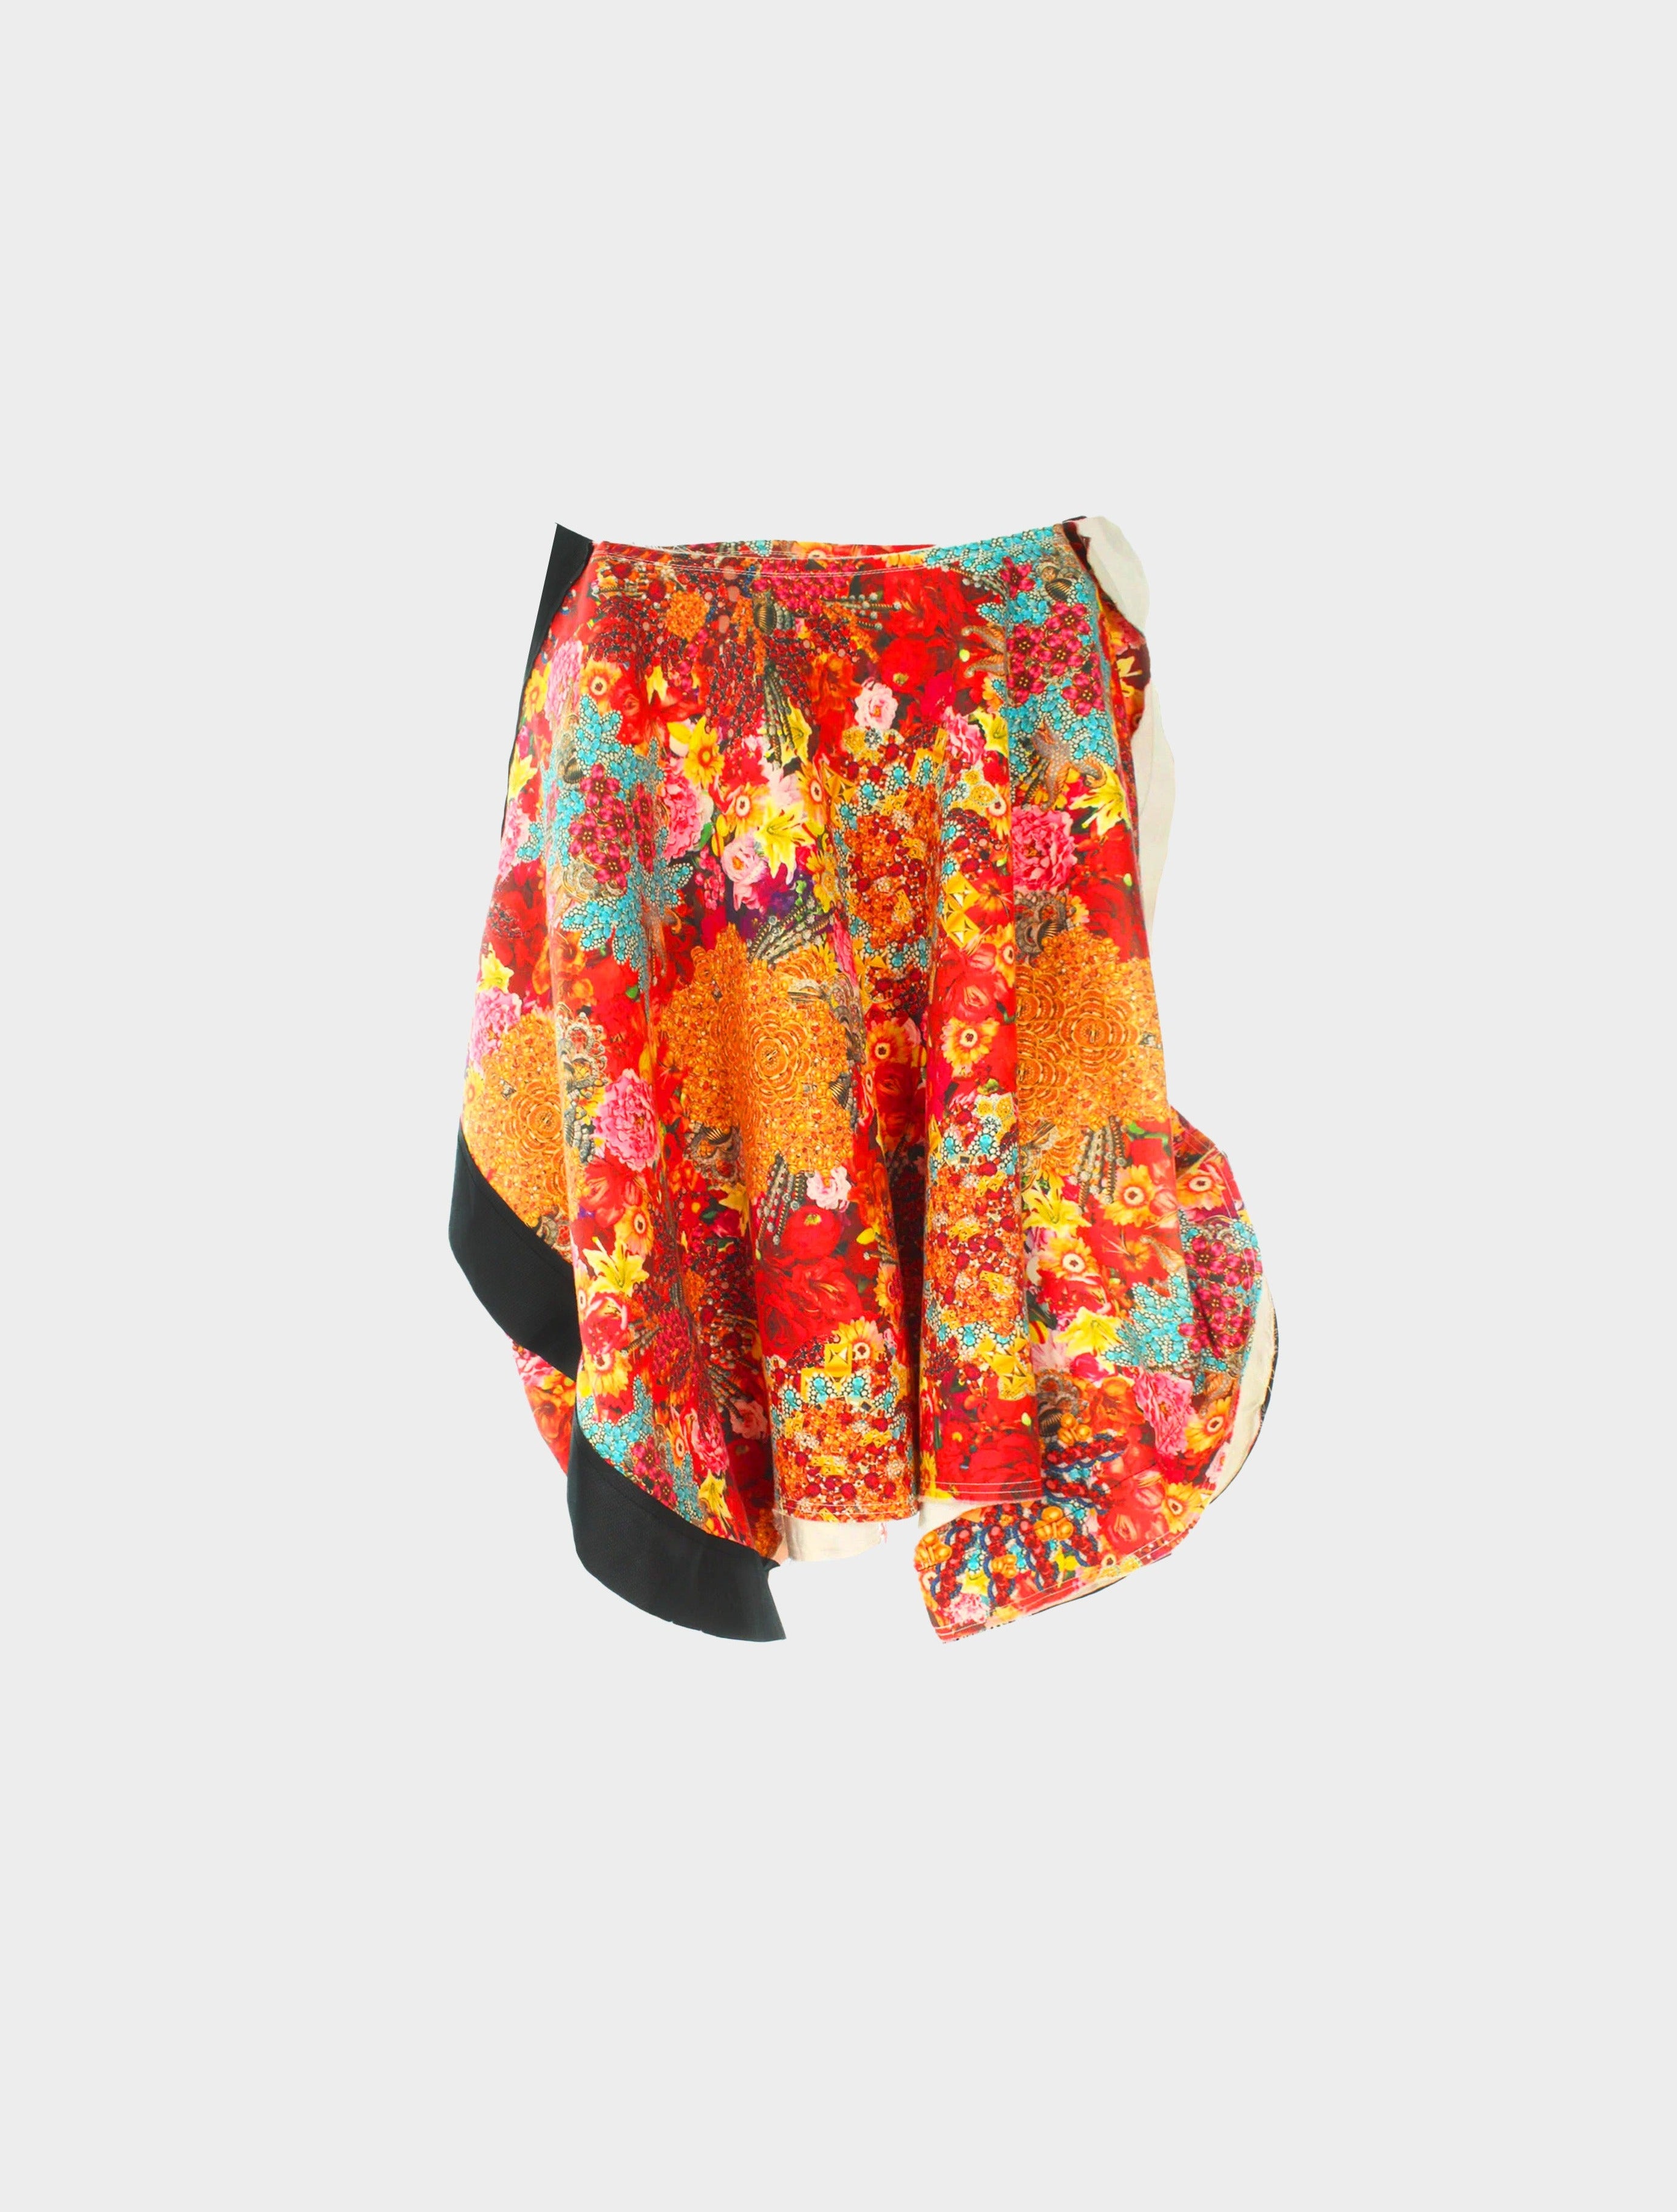 Comme des Garçons SS 2004 Floral Patchwork Skirt · INTO